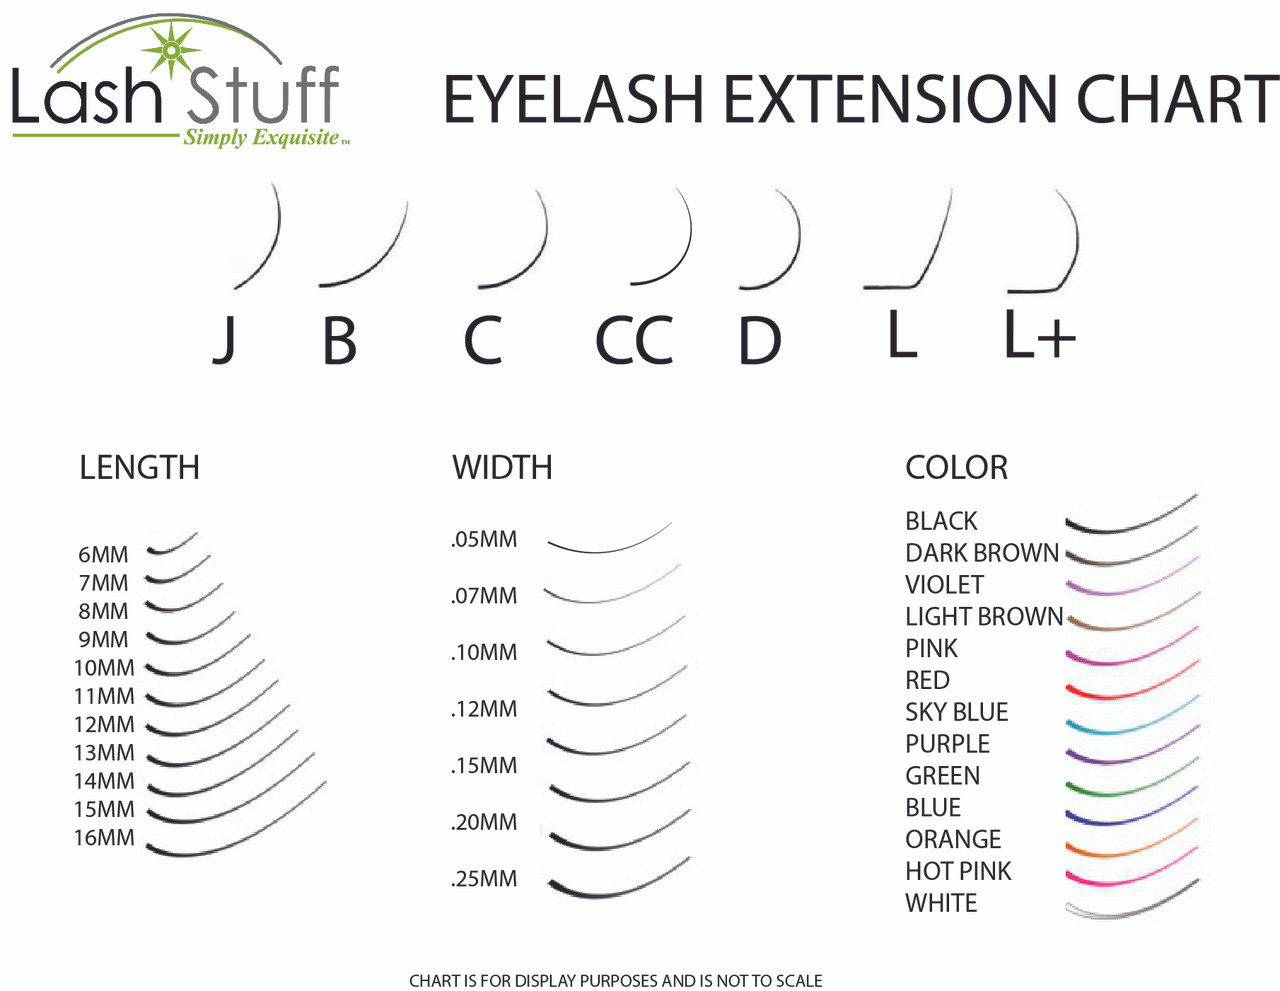 Eyelash Extension Size Chart Lash Stuff